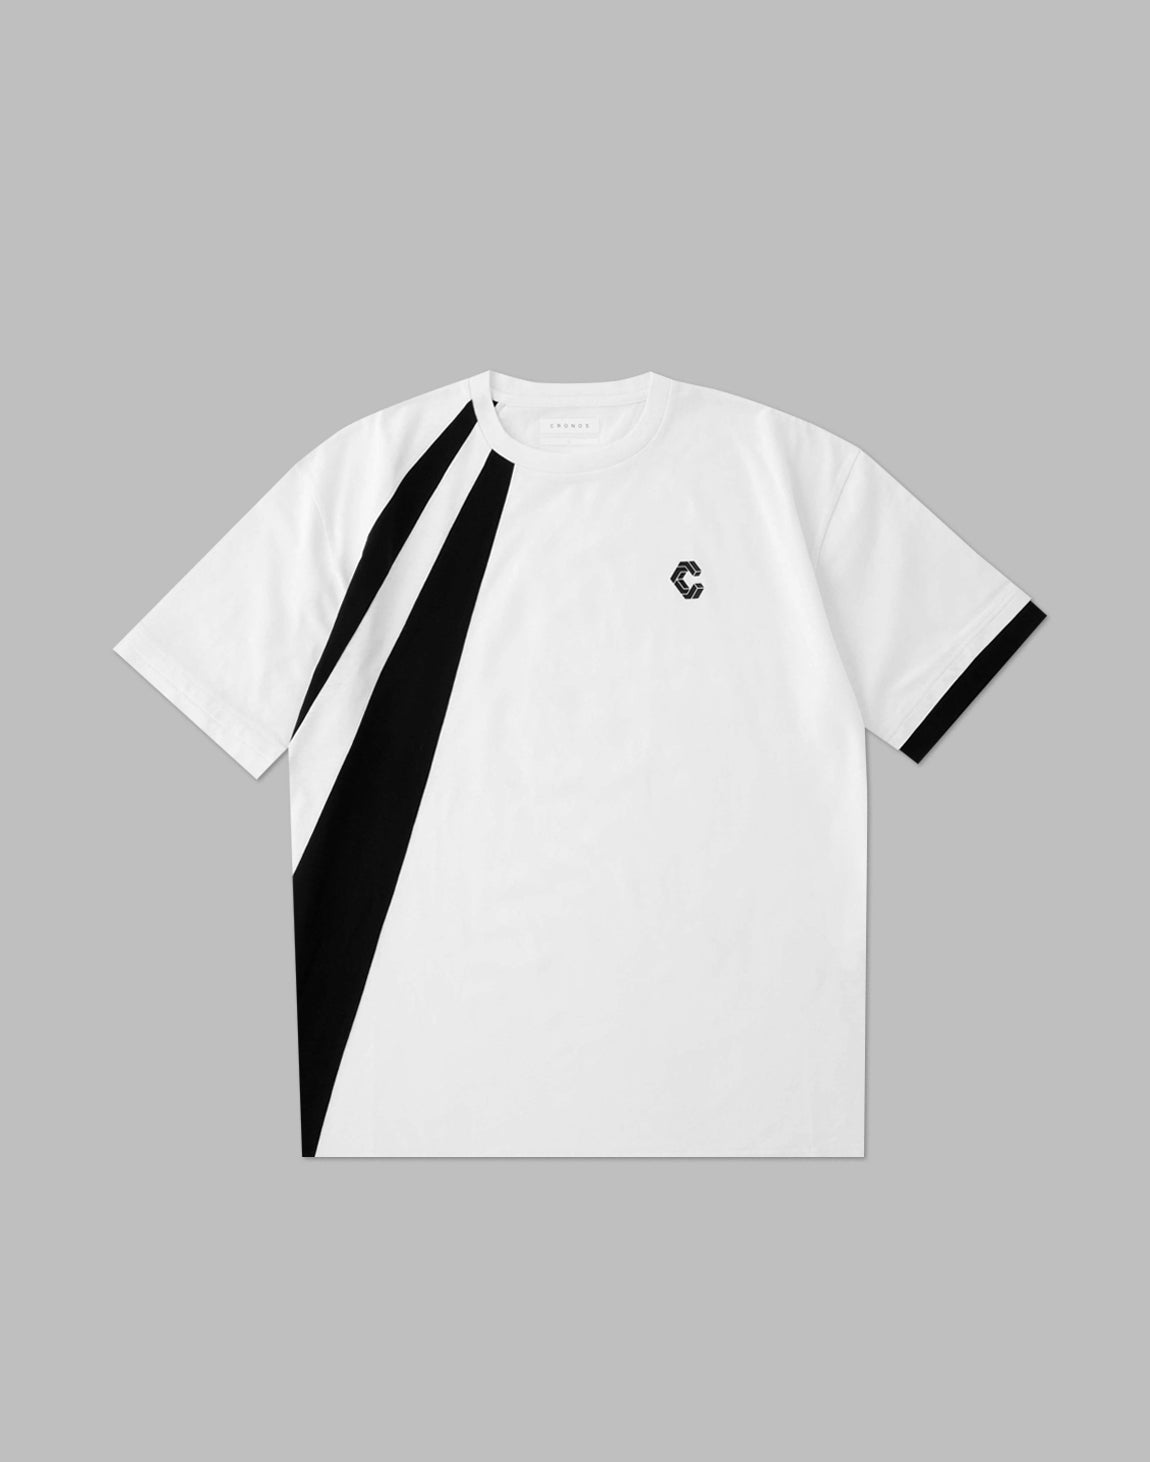 CRONOS クロノス オーバーサイズ Tシャツ Sサイズ ホワイト